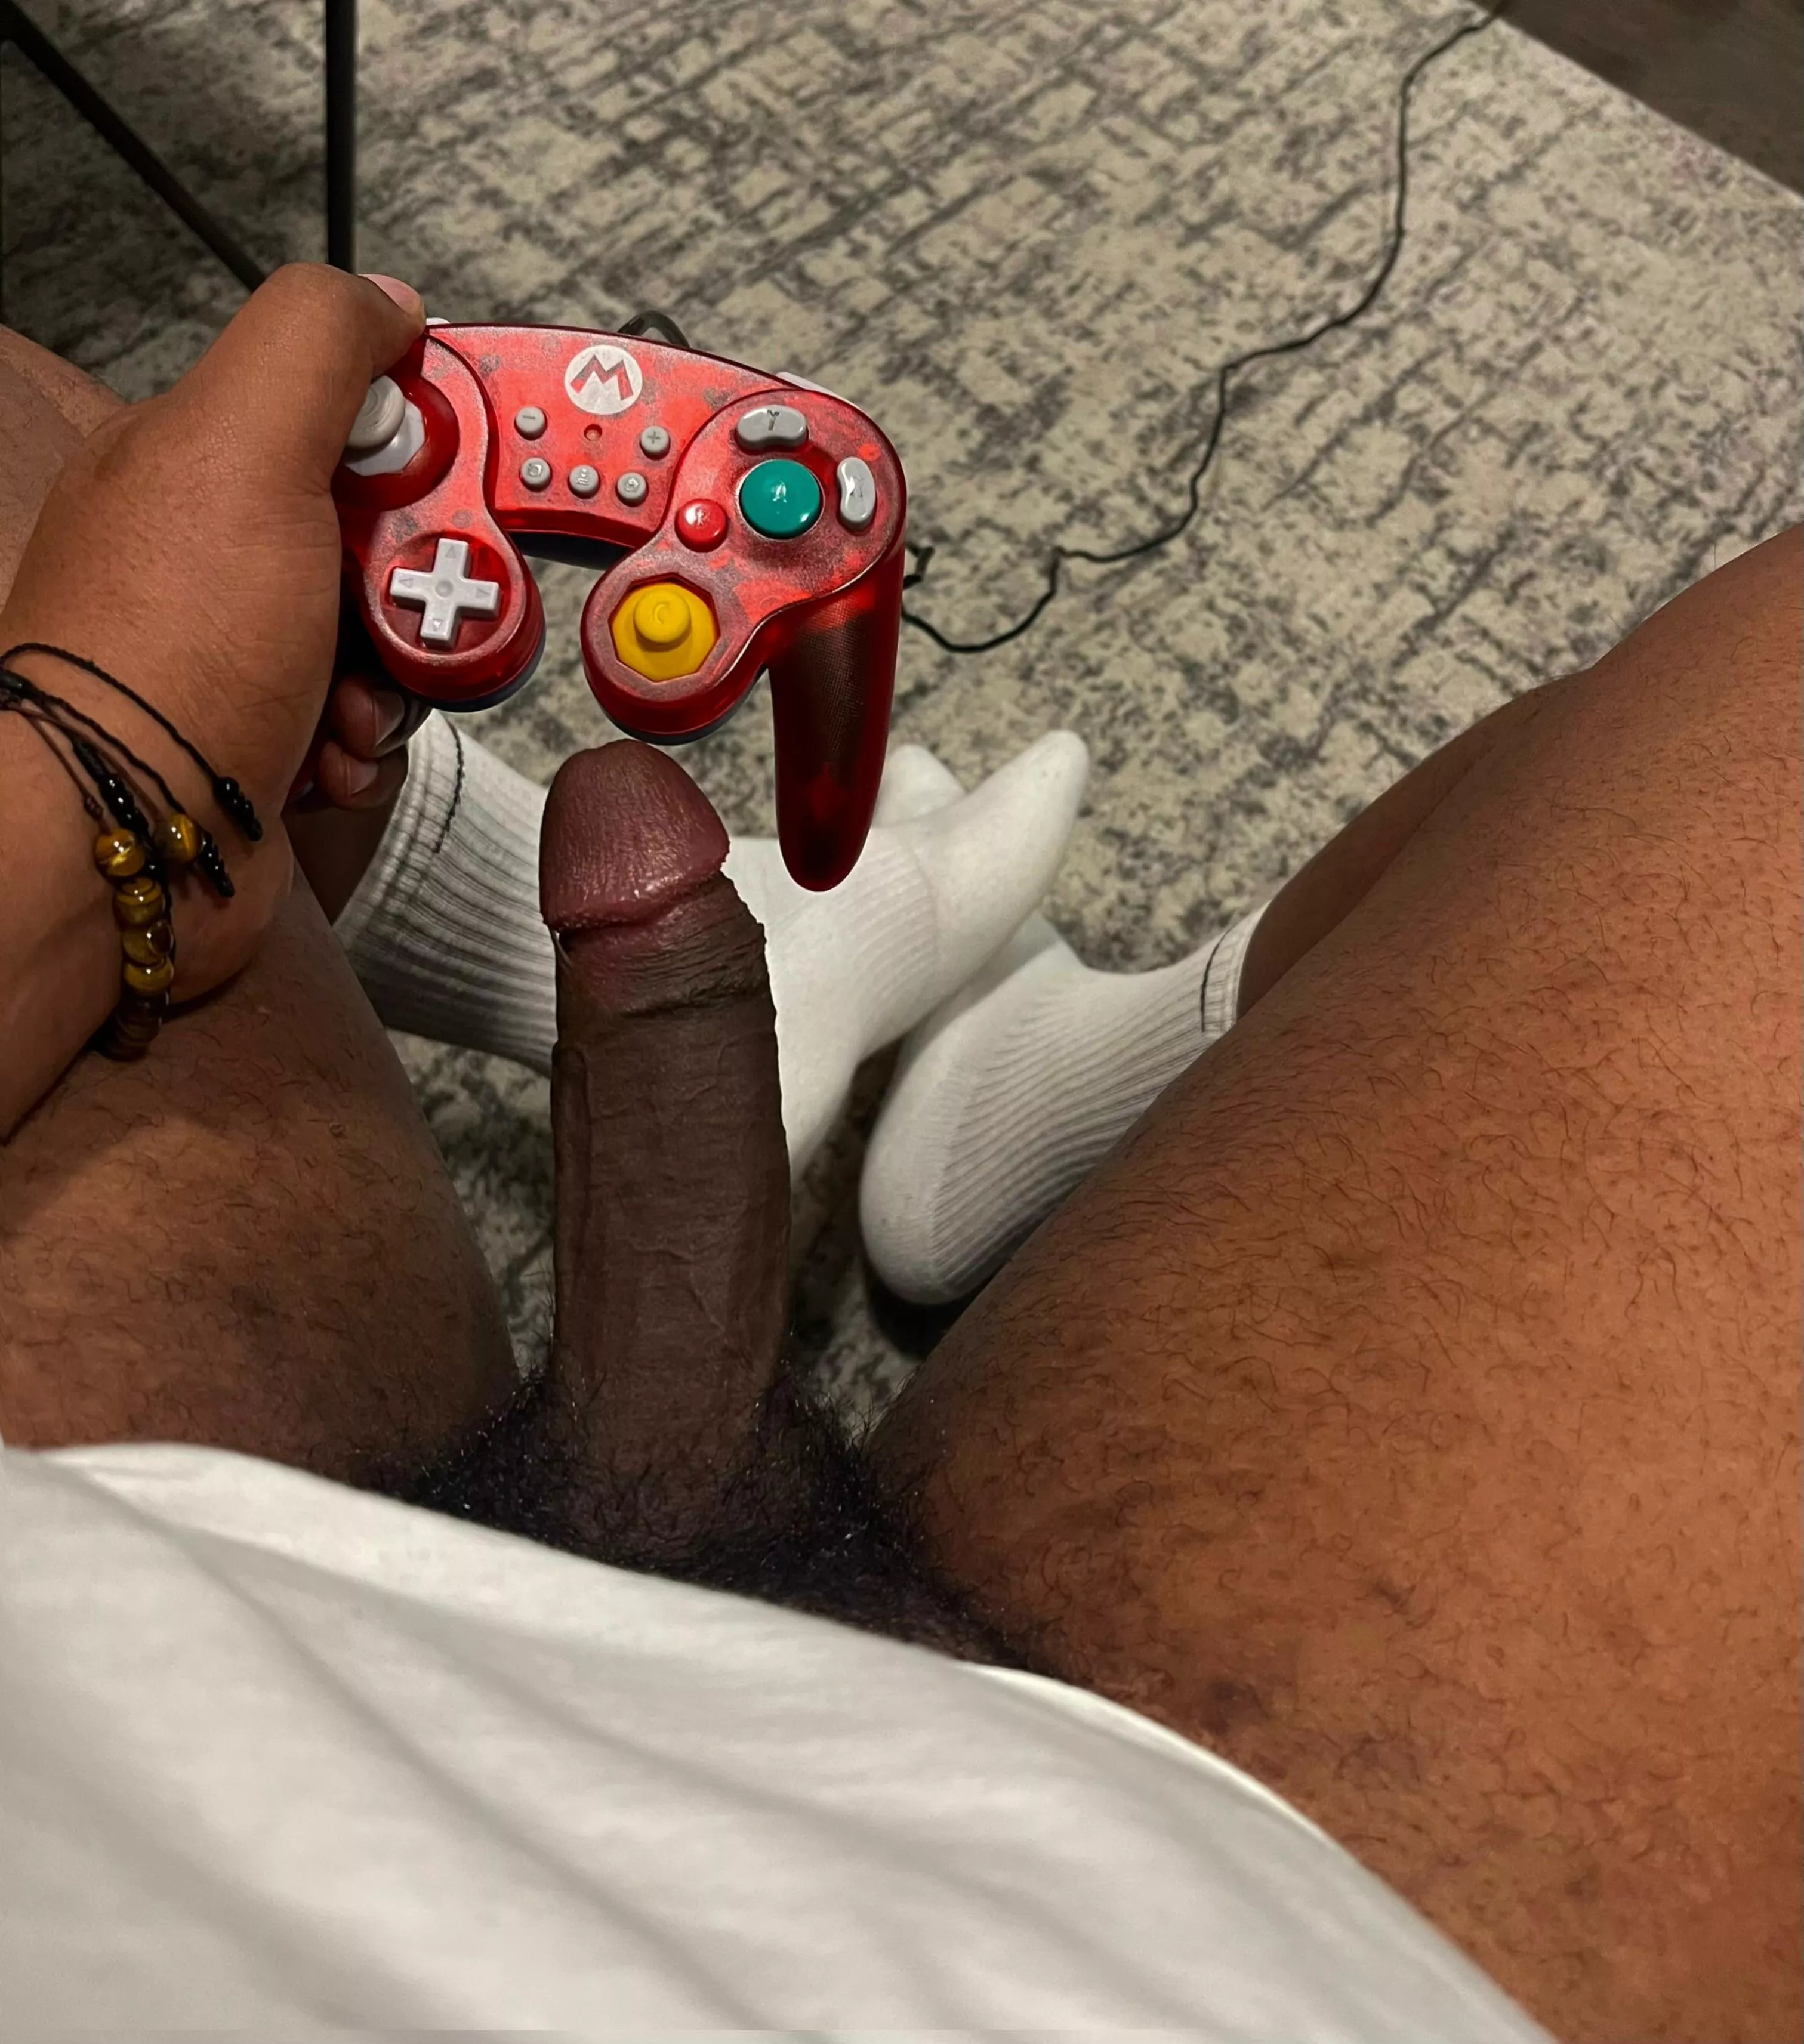 Mario Kart Porn